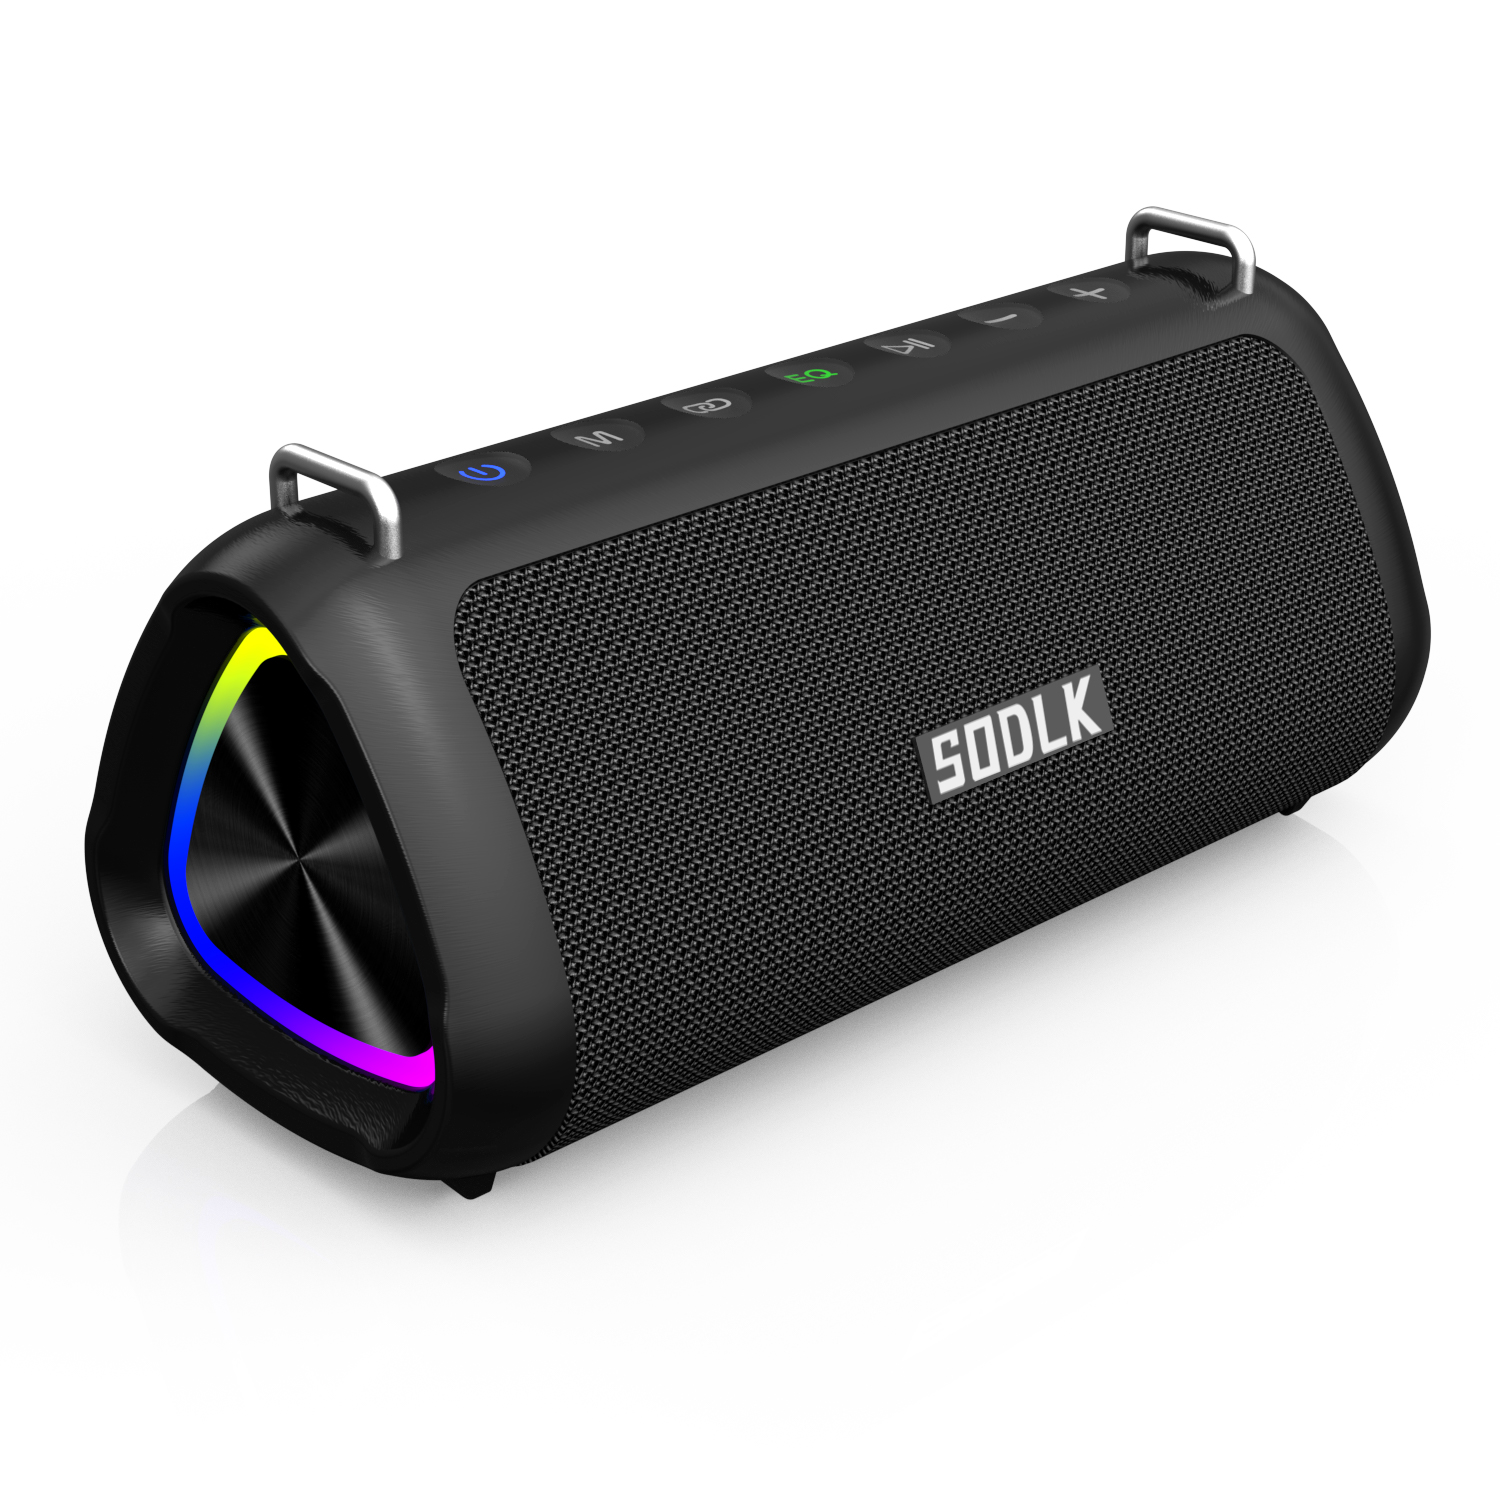 SODLK T18 Portable Loud Speaker with Subwoofer 80W Outdoor Speakers IPX67 Waterproof Deep Bass Speaker, Power Bank, TF Card, AUX